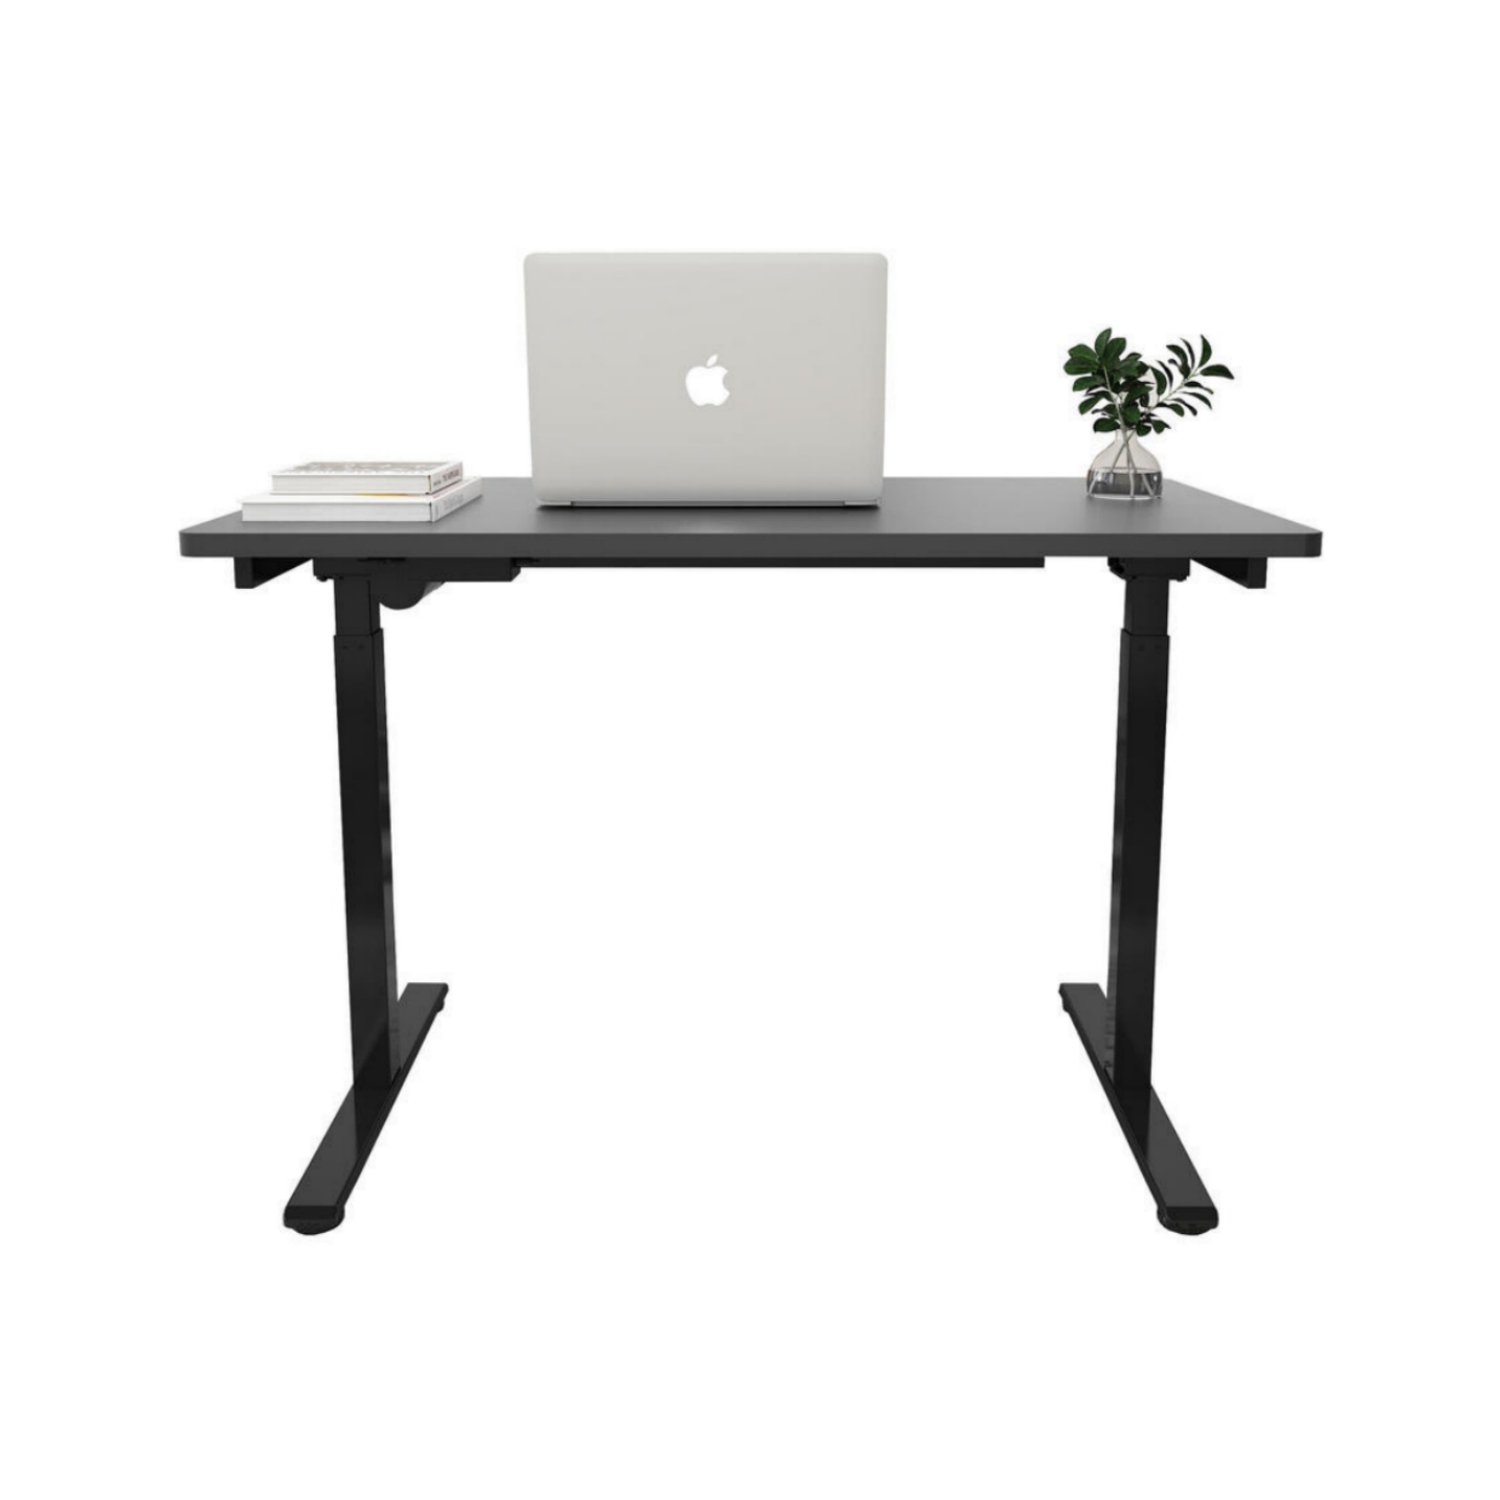 Electric Height Adjustable Standing Desk Frame, Ergonomic Sit Stand Up Desk for 39-63 inch TableTops (Frame Only)